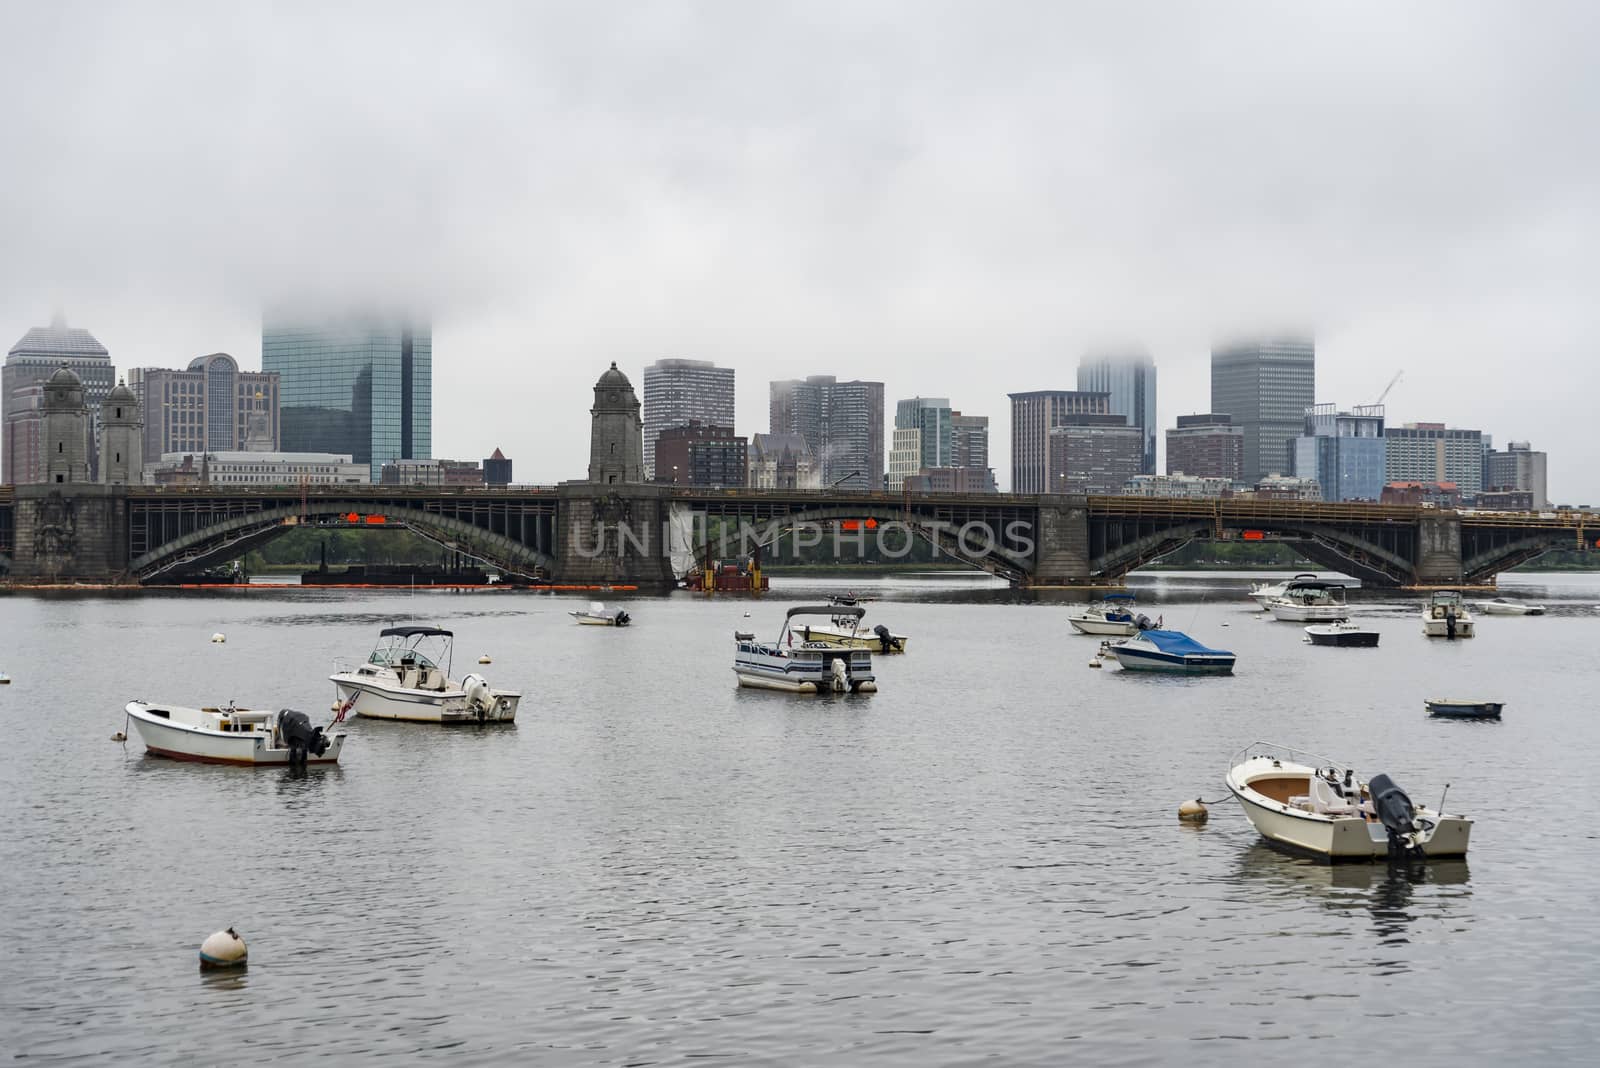 Skyline of downtown Boston by edella